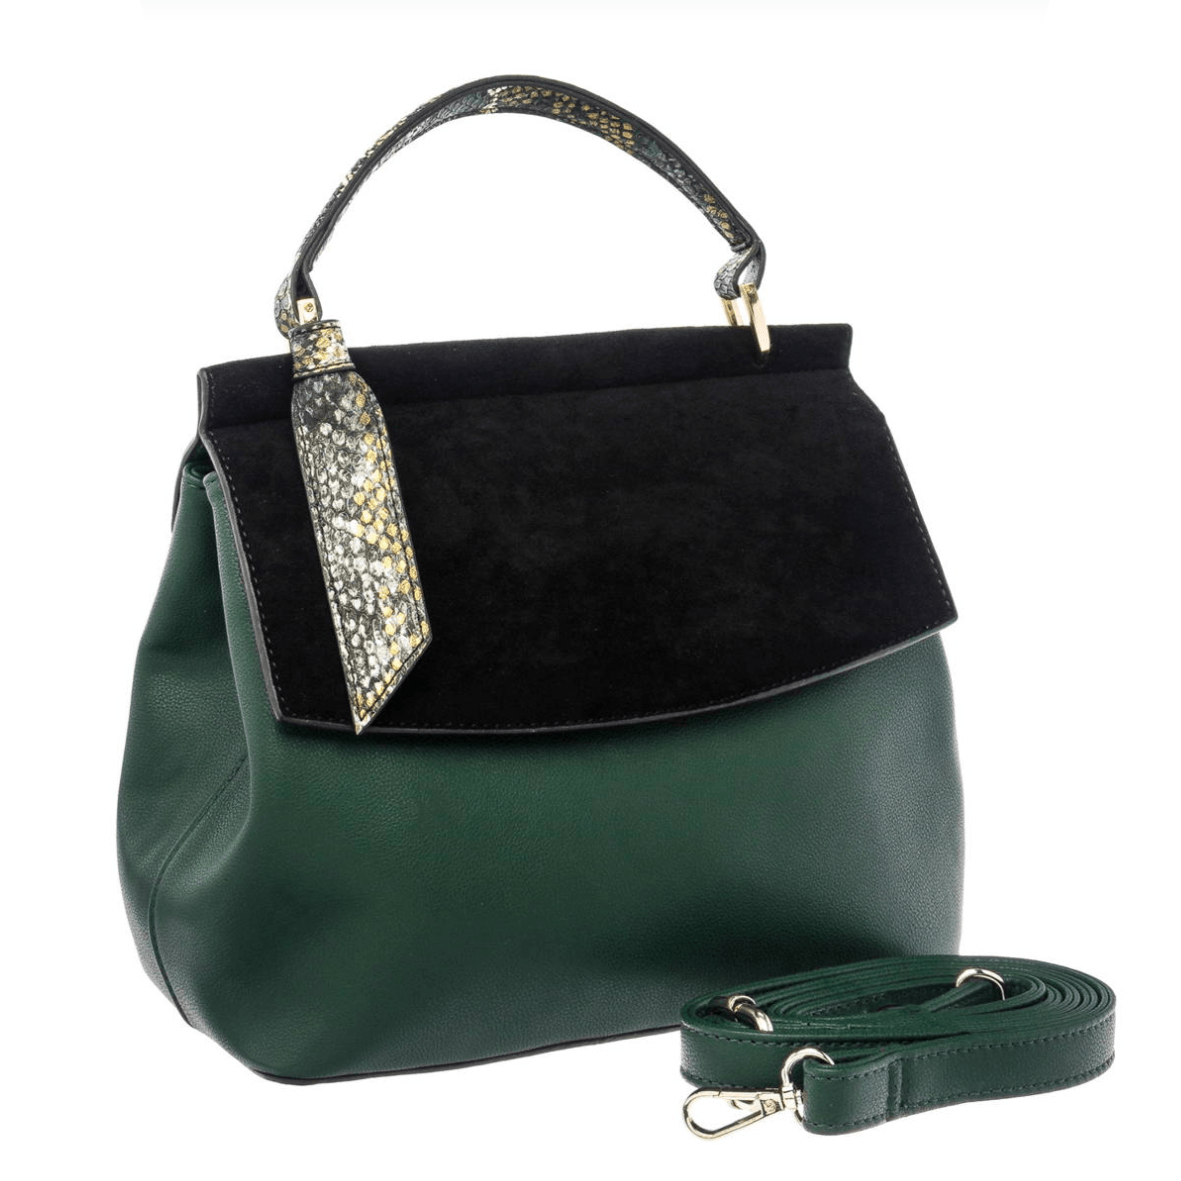 Khaki green and black grab bag with an adjustable strap